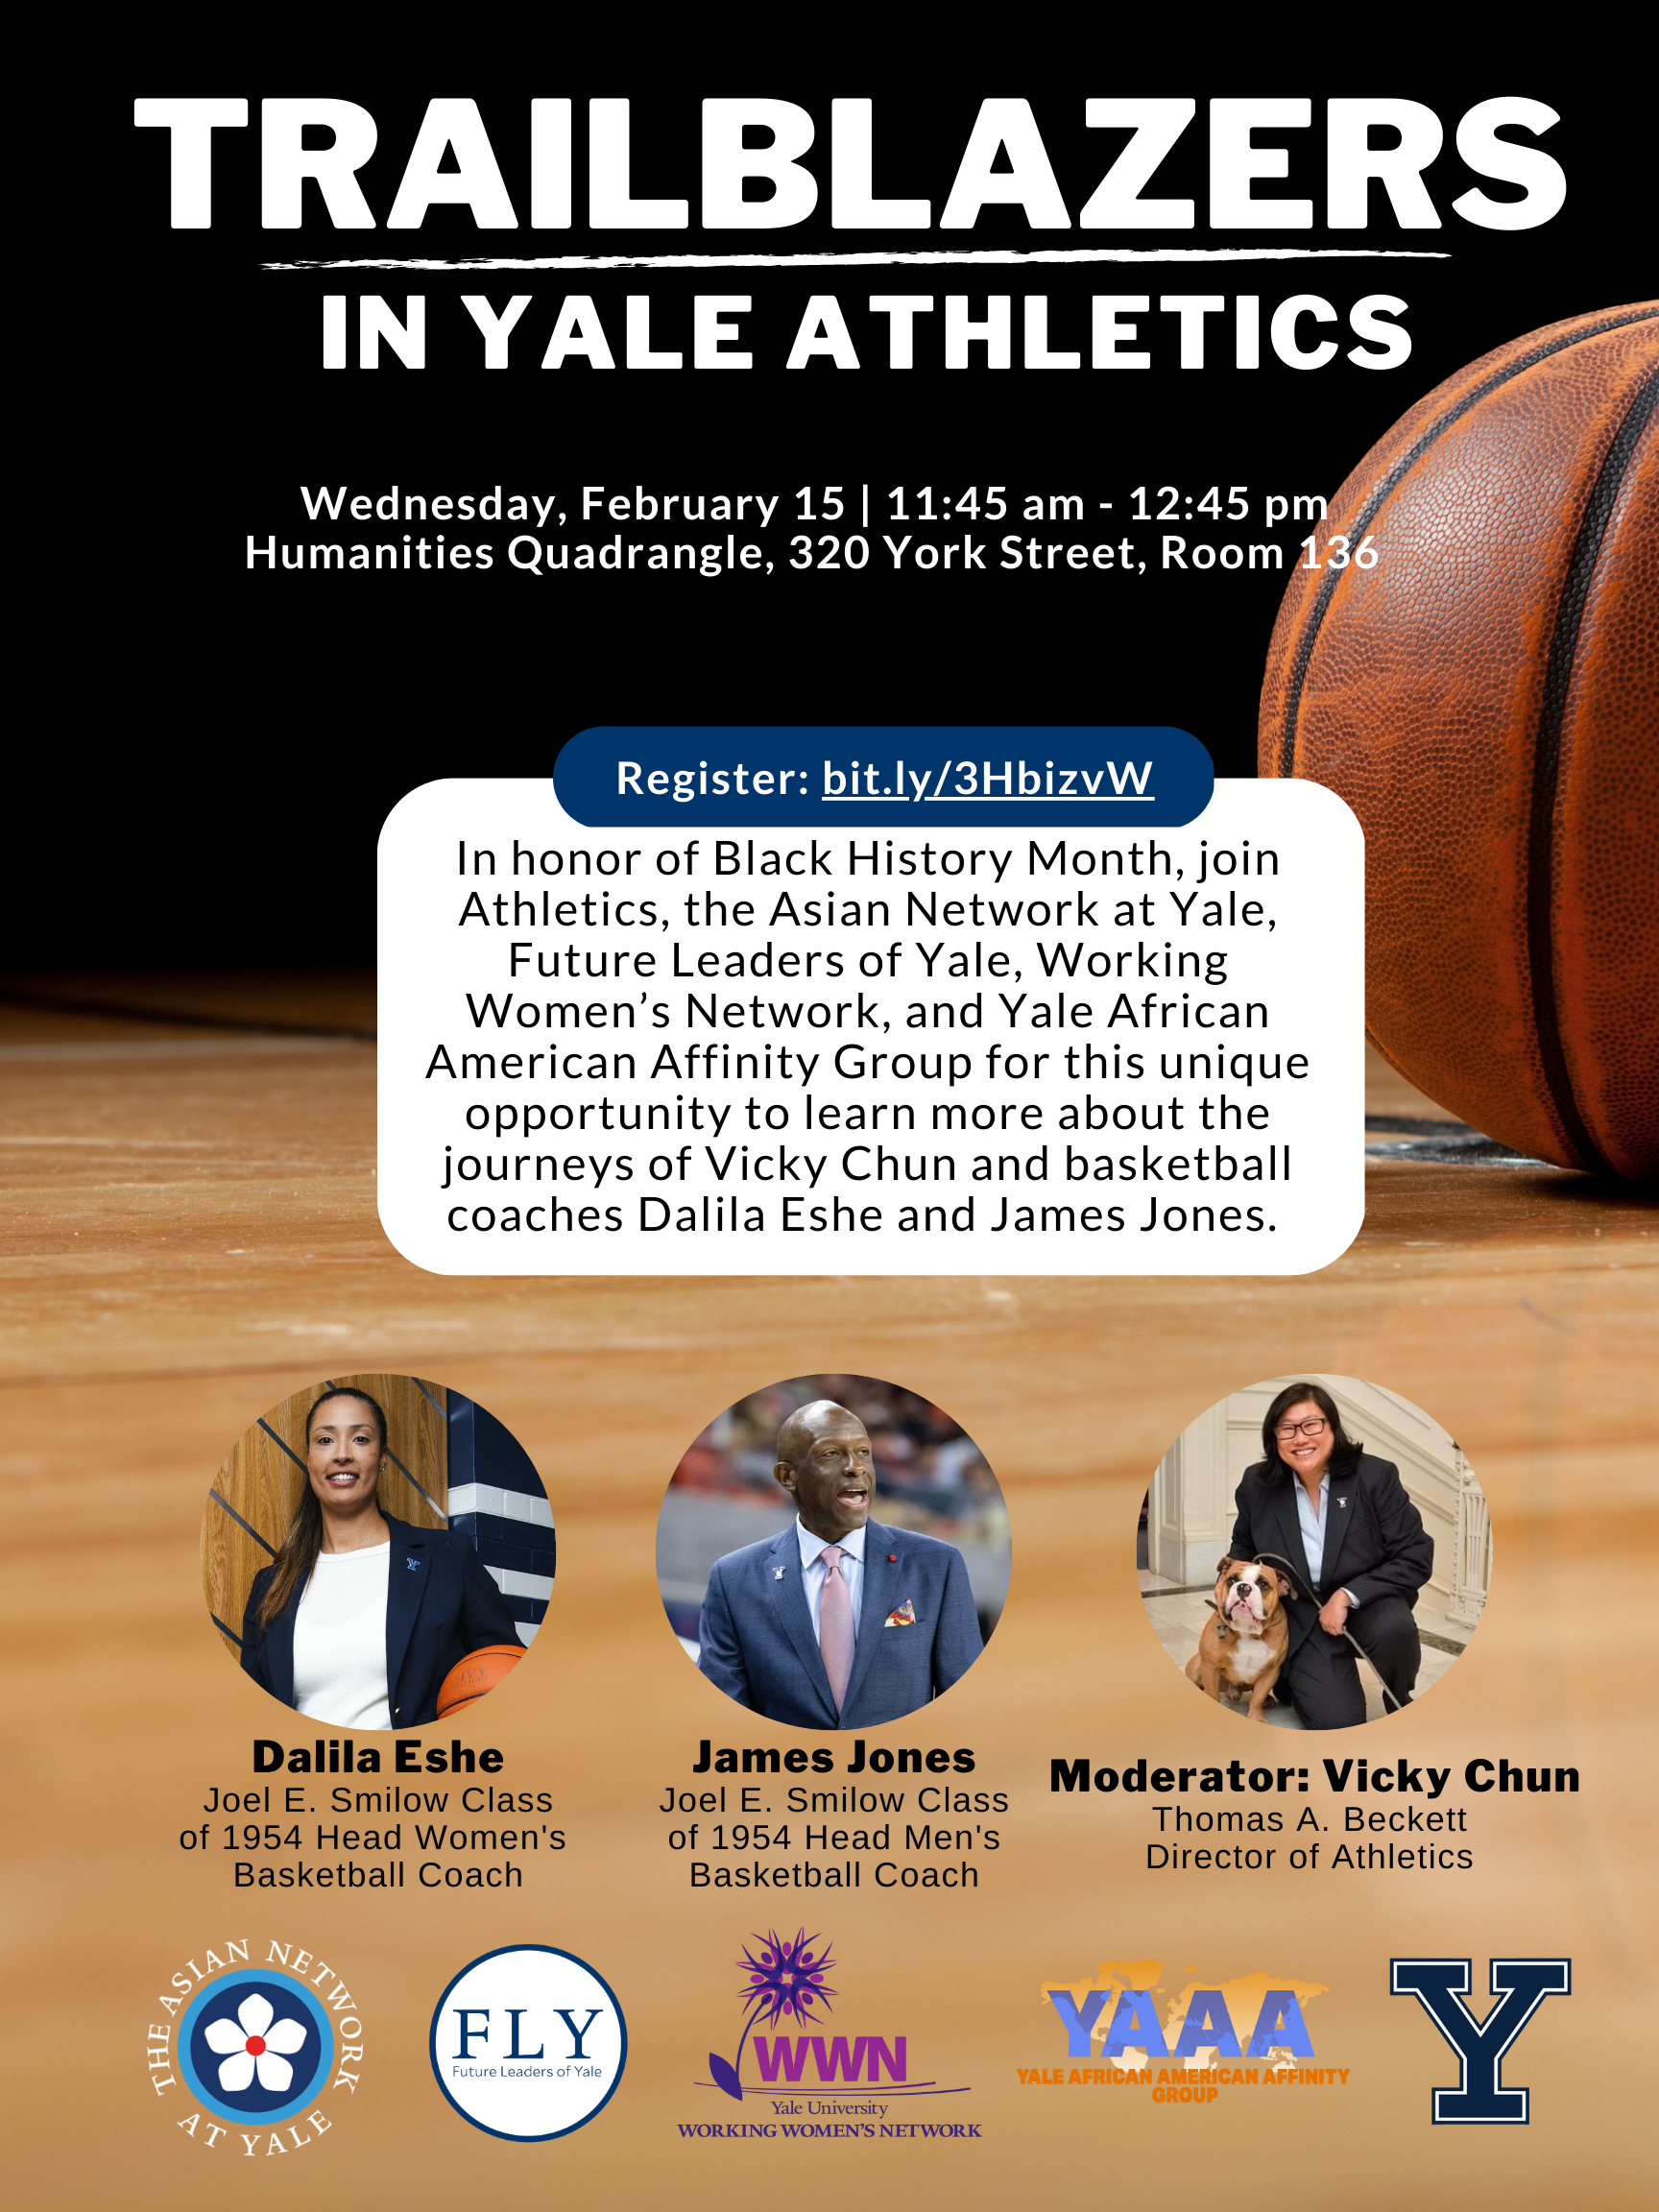 Trailblazers in Yale Athletics | Asian Network @ Yale